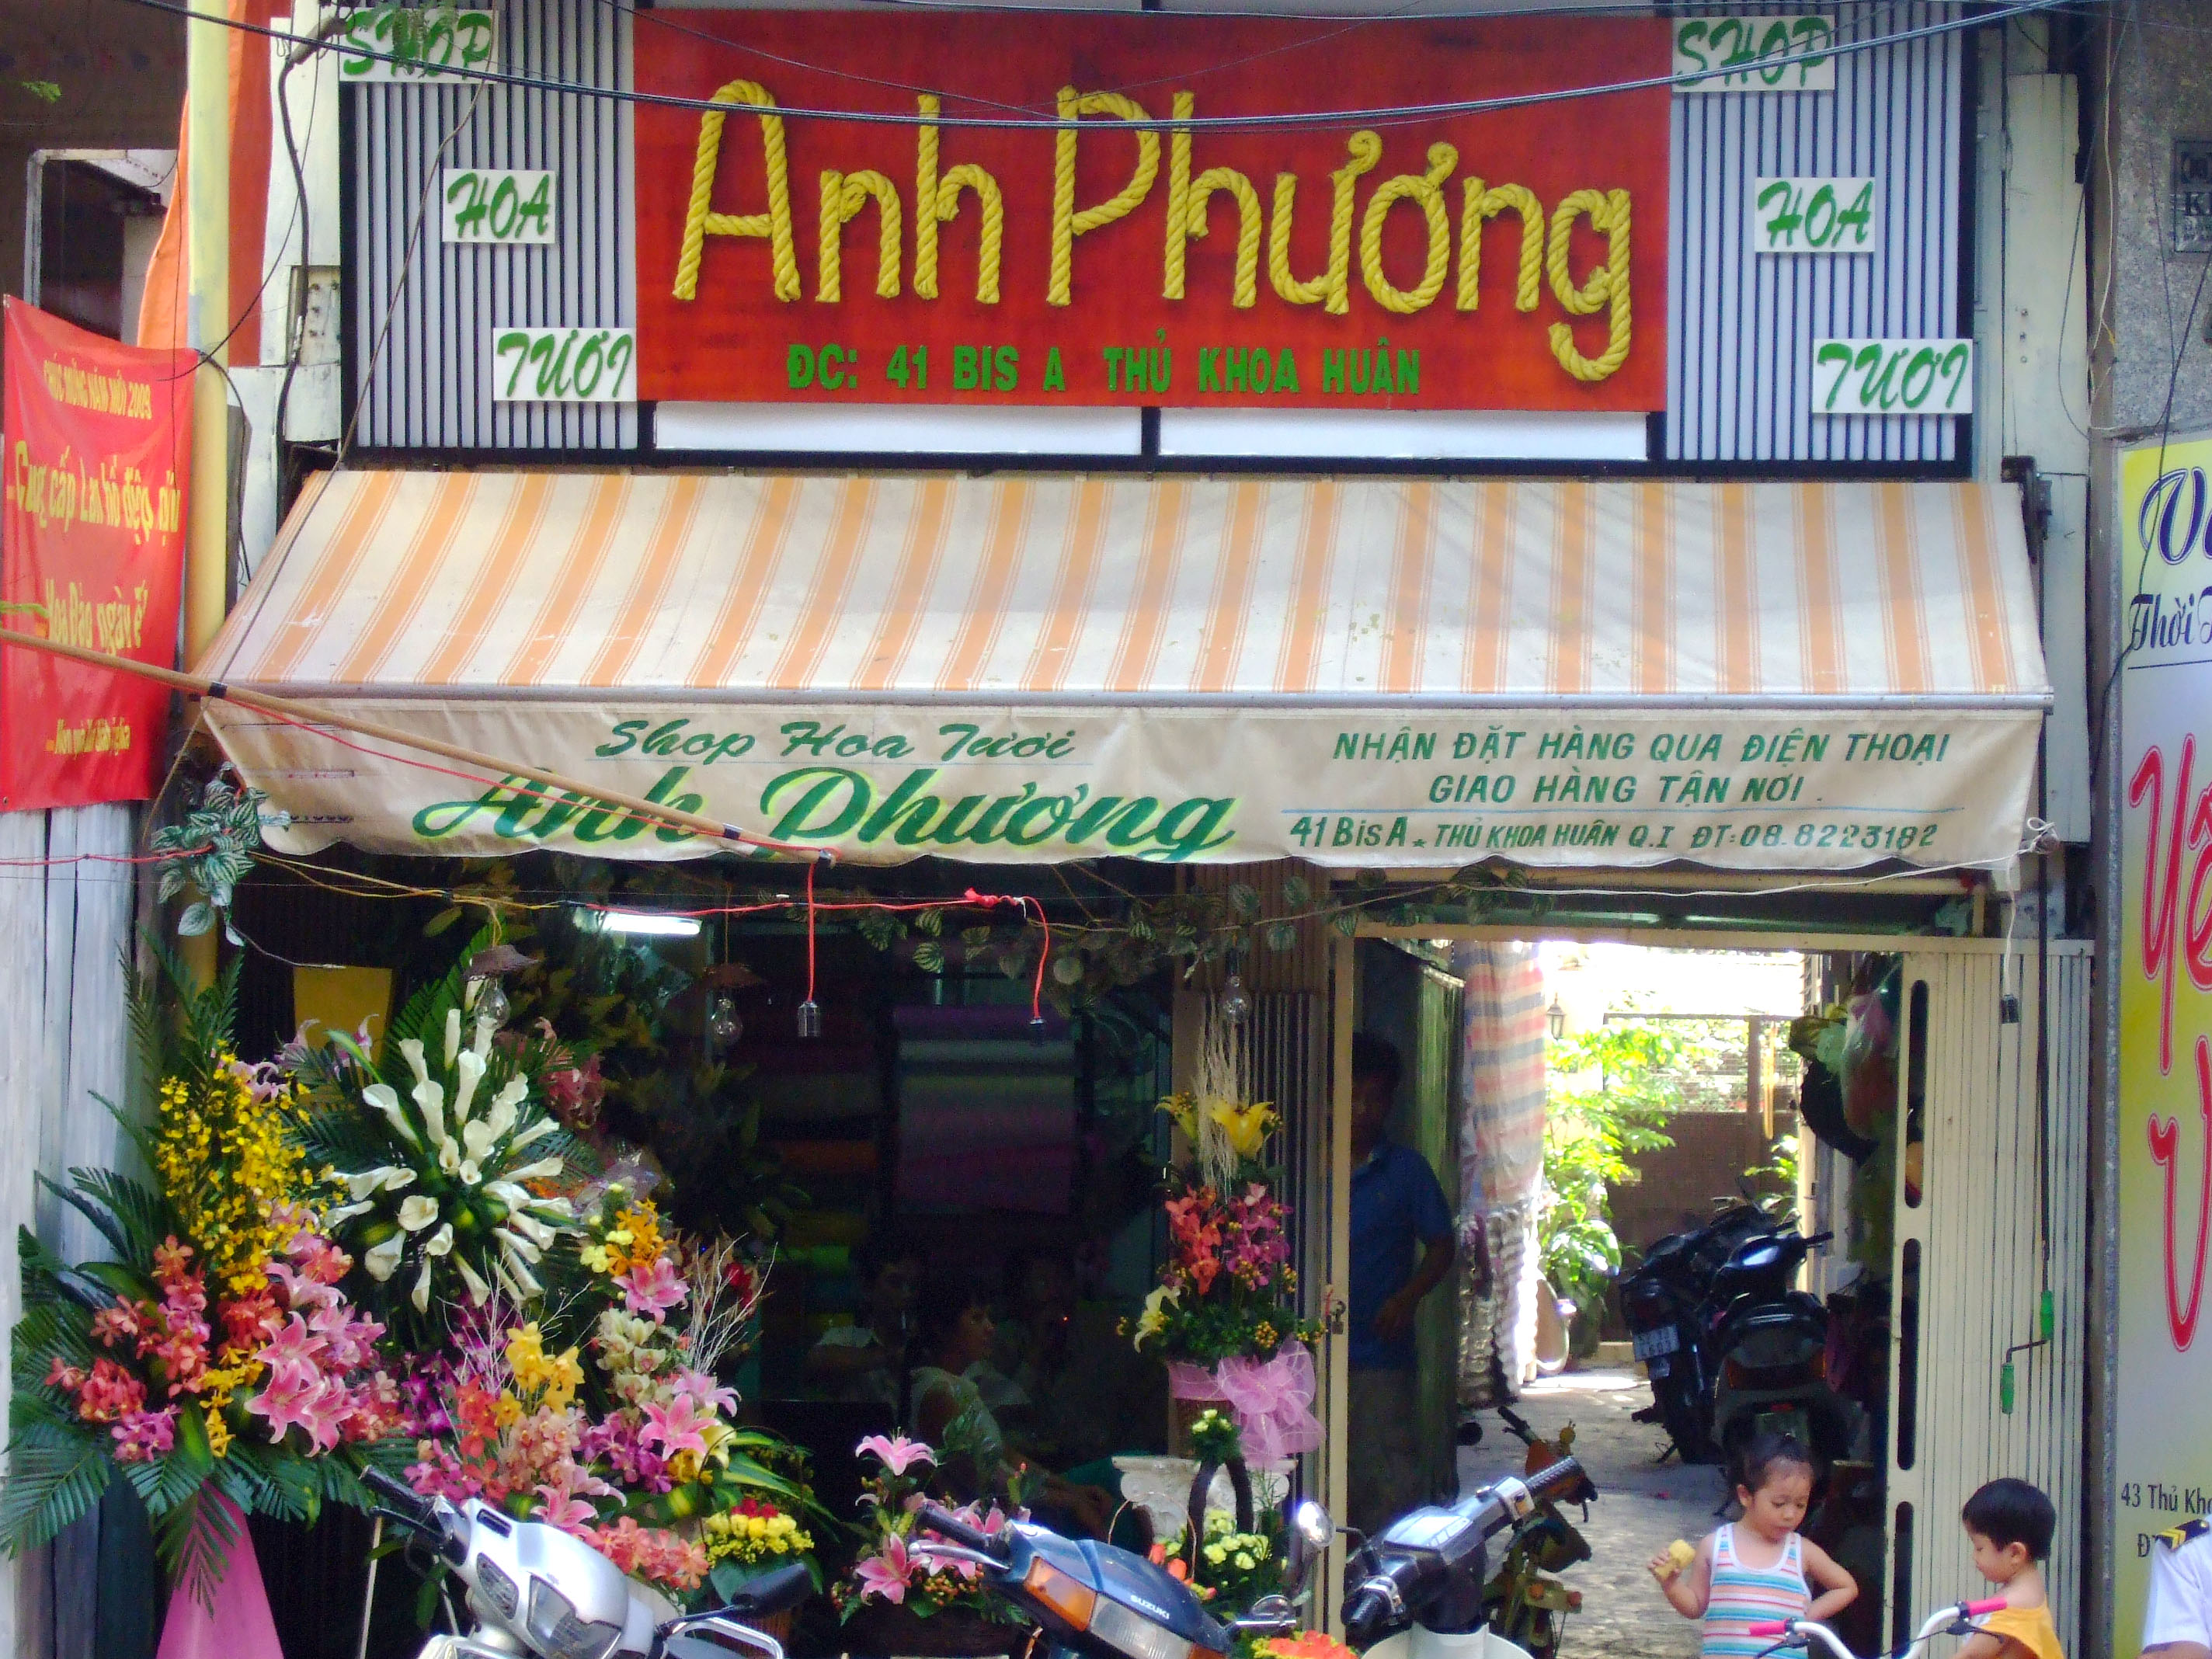 Vietnam Ho Chi Minh city area Anh Phuong florist Saigon Feb 2009 01